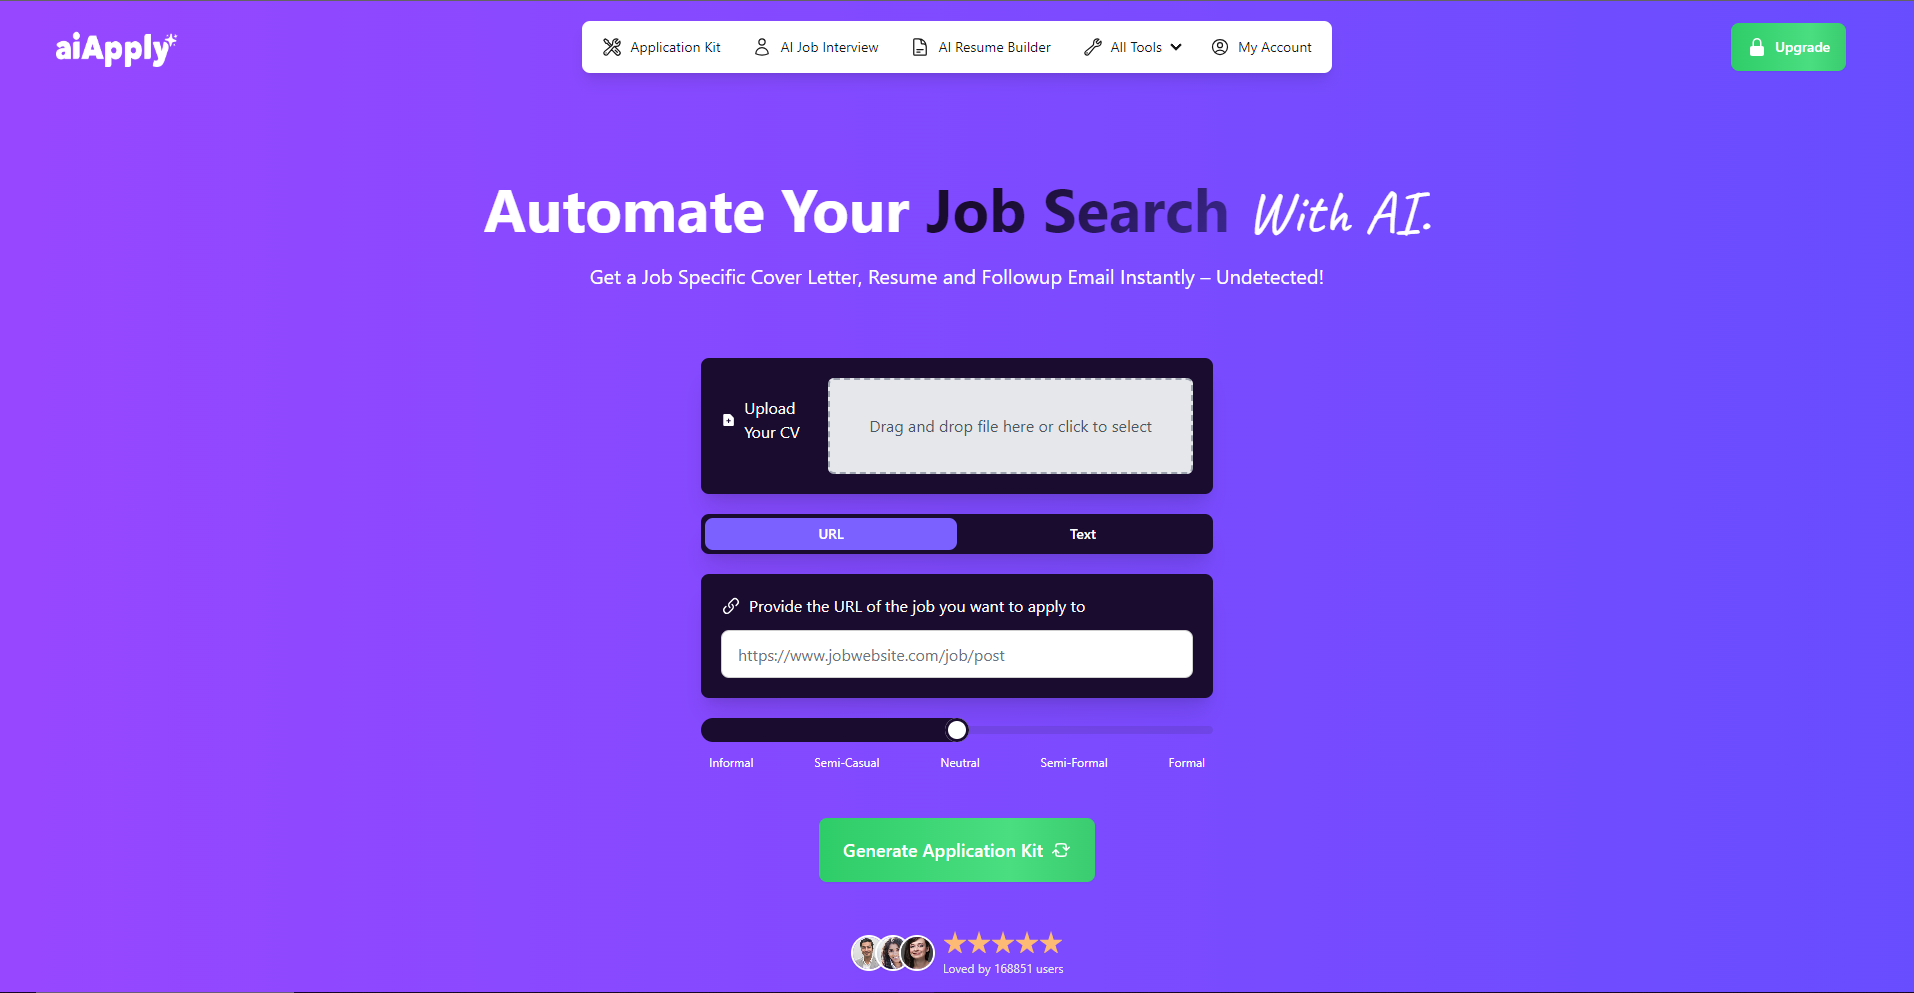 Streamline Your Job Search